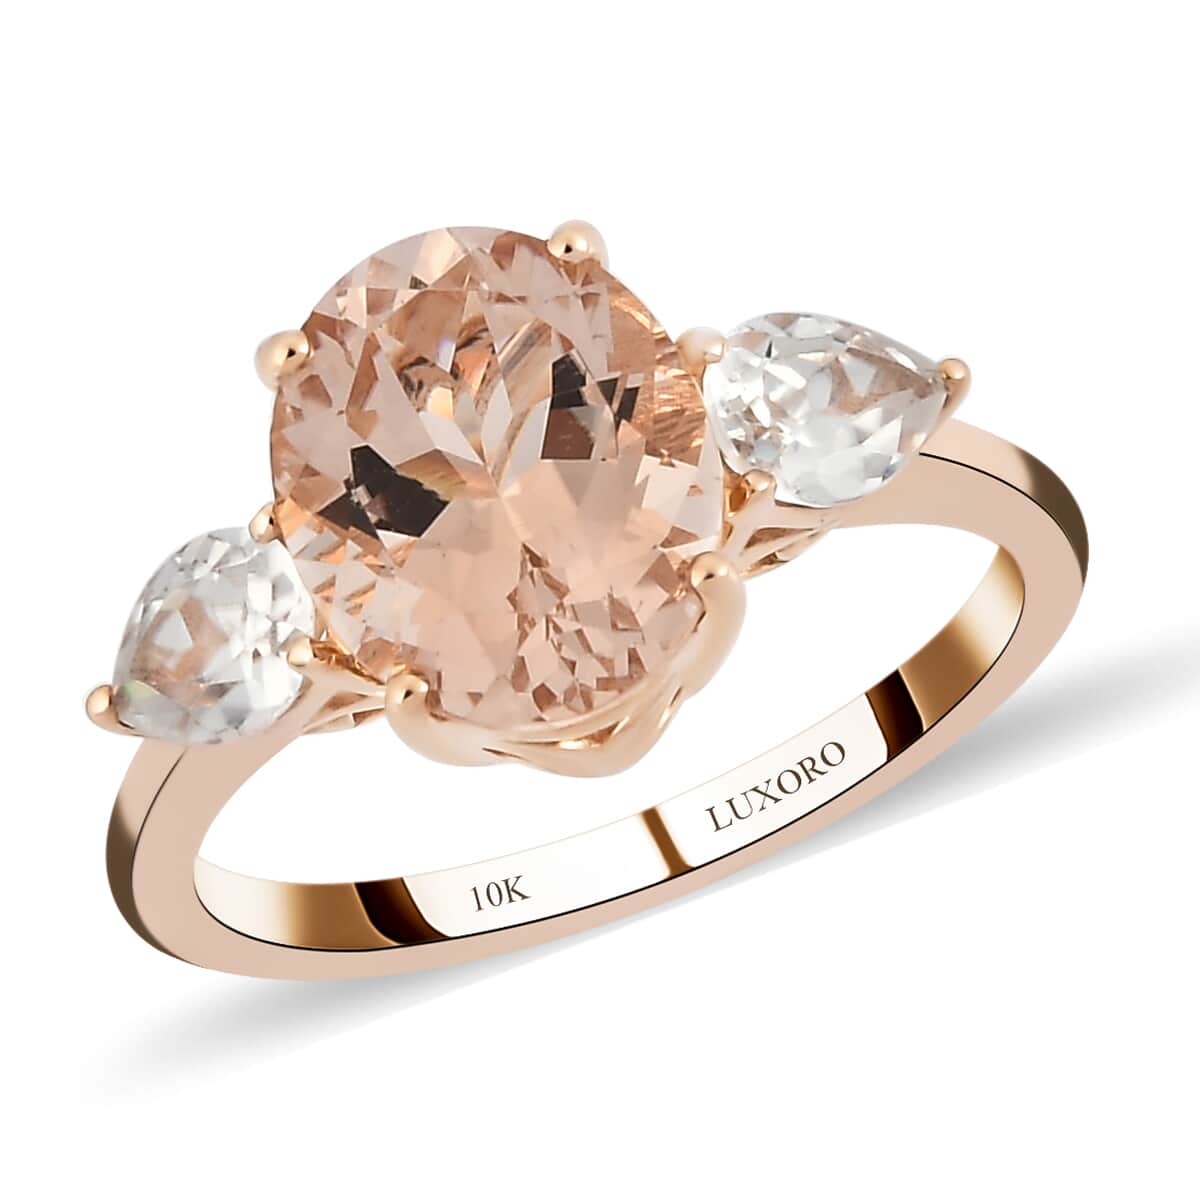 Luxoro 10K Rose Gold Premium Marropino Morganite and Natural White Zircon 3 Stone Ring (Size 10.0) 2.30 Grams 3.00 ctw image number 0